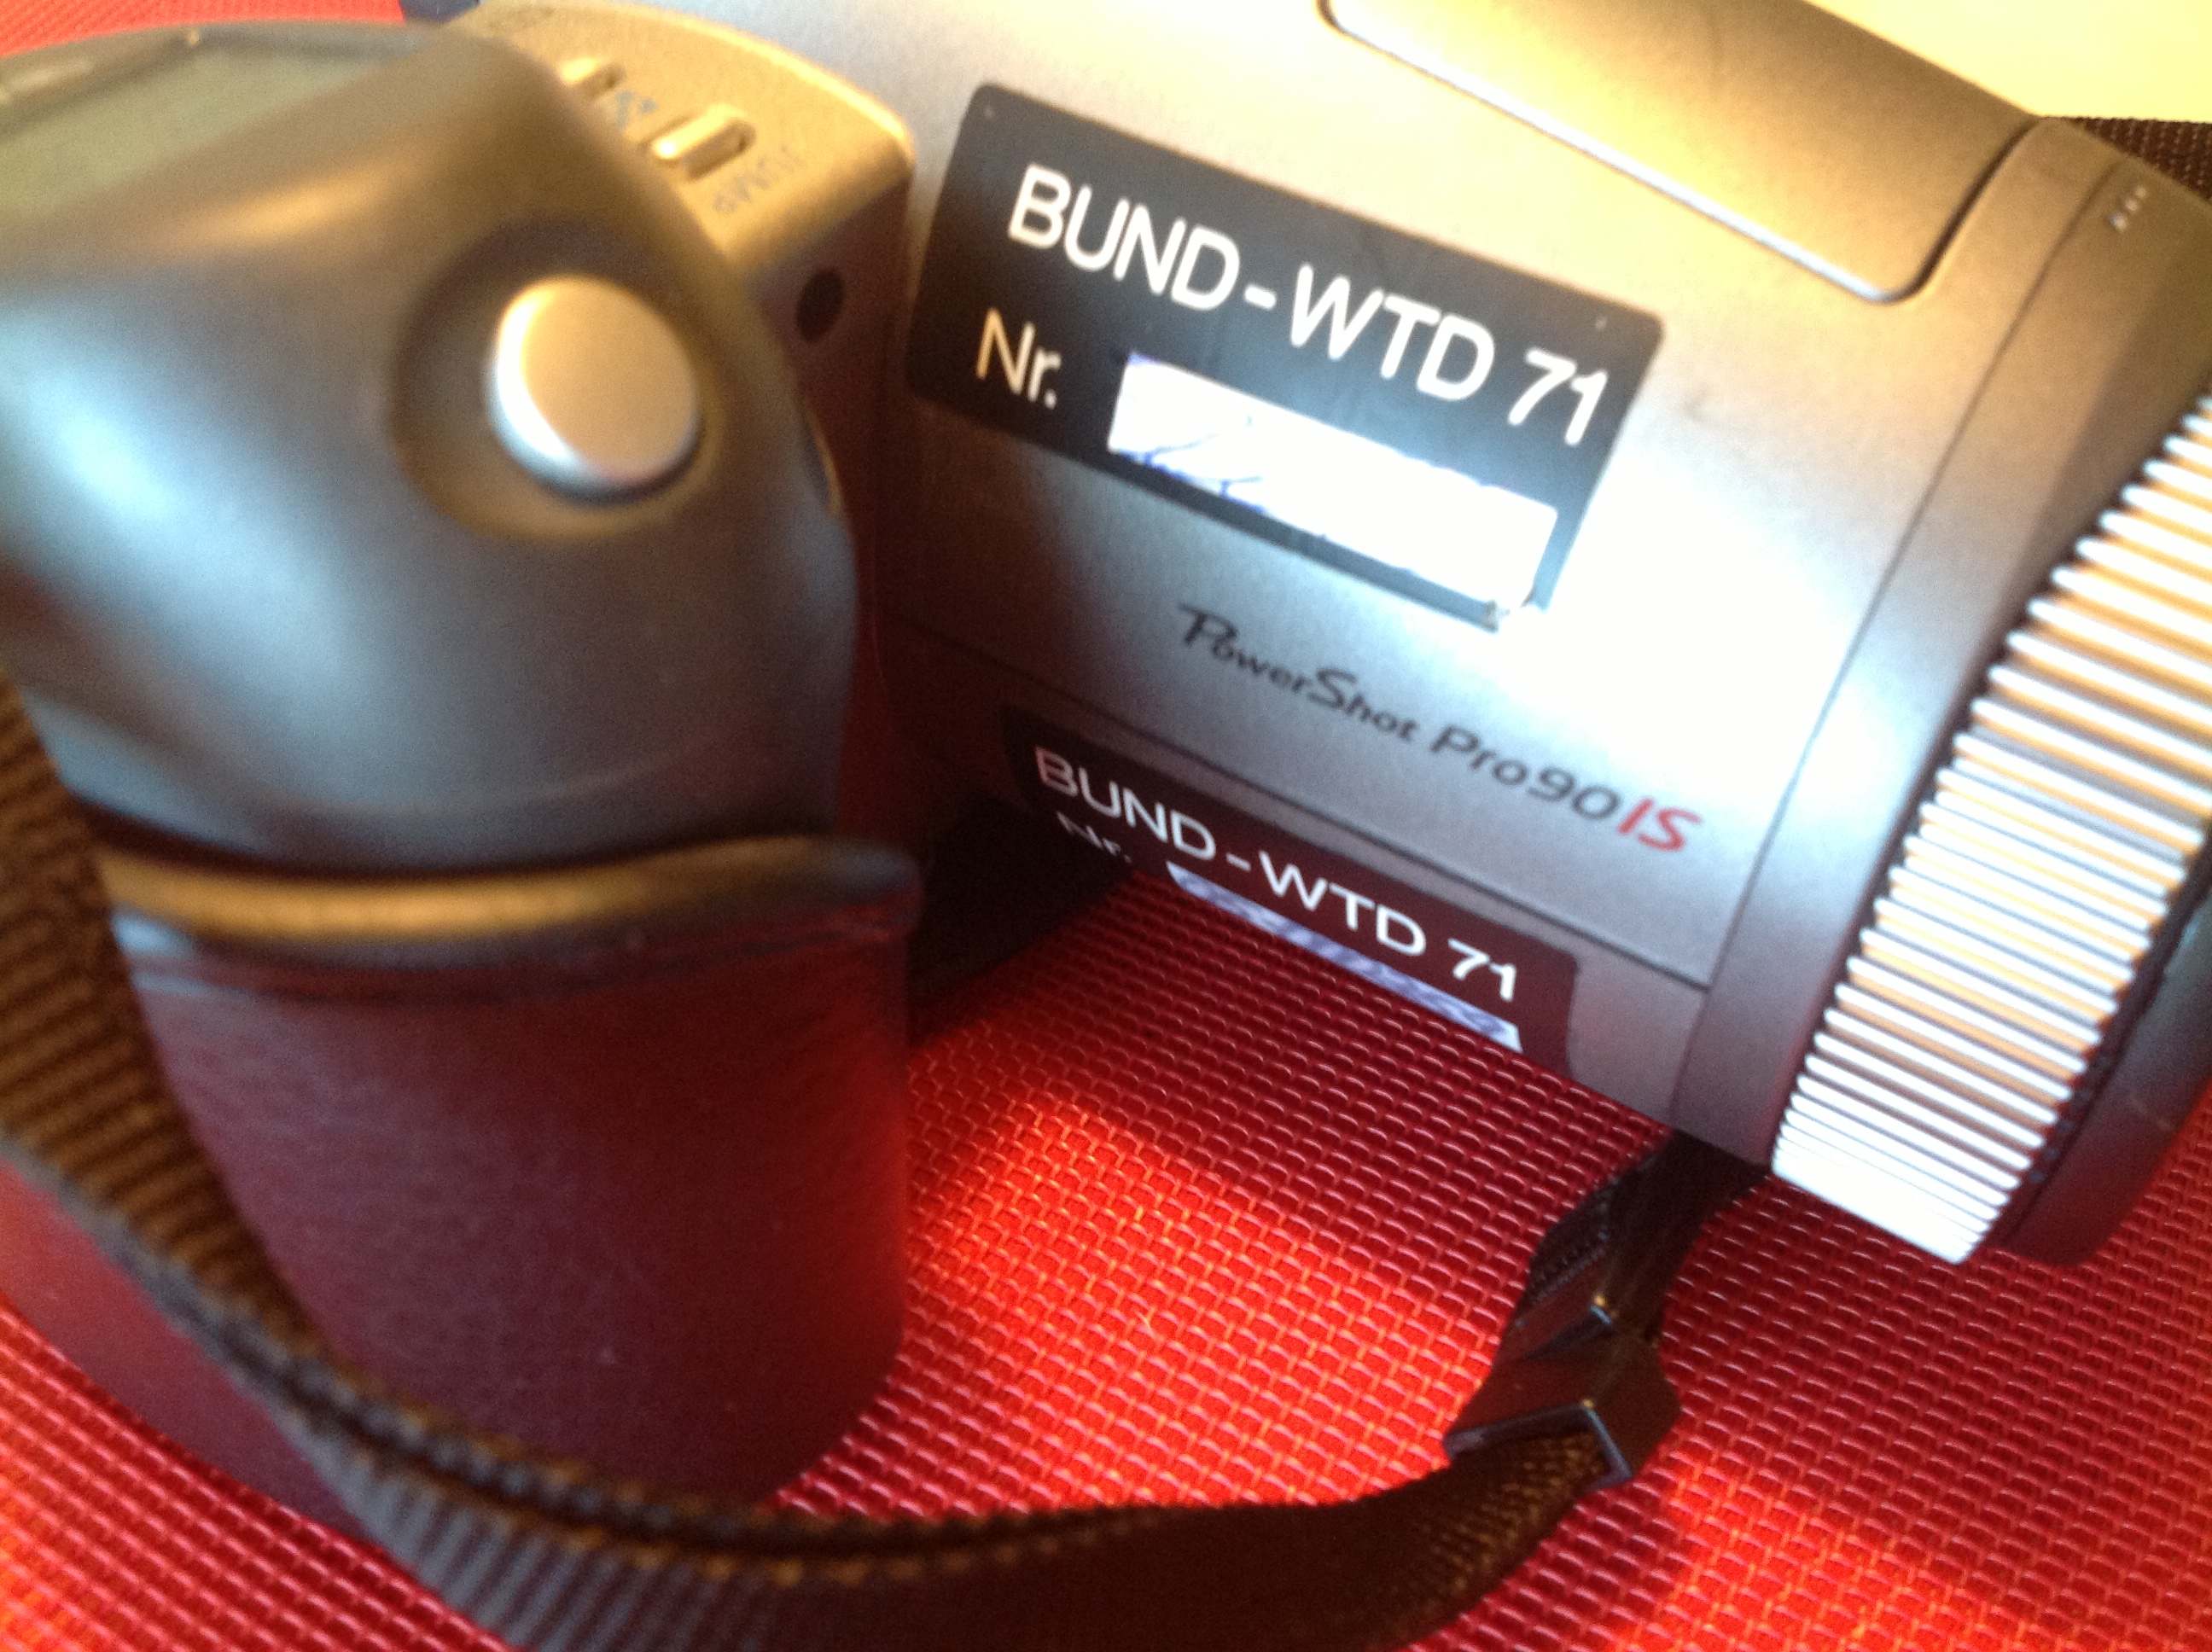 Canon Power Shot Pro 90 IS Digital Camera